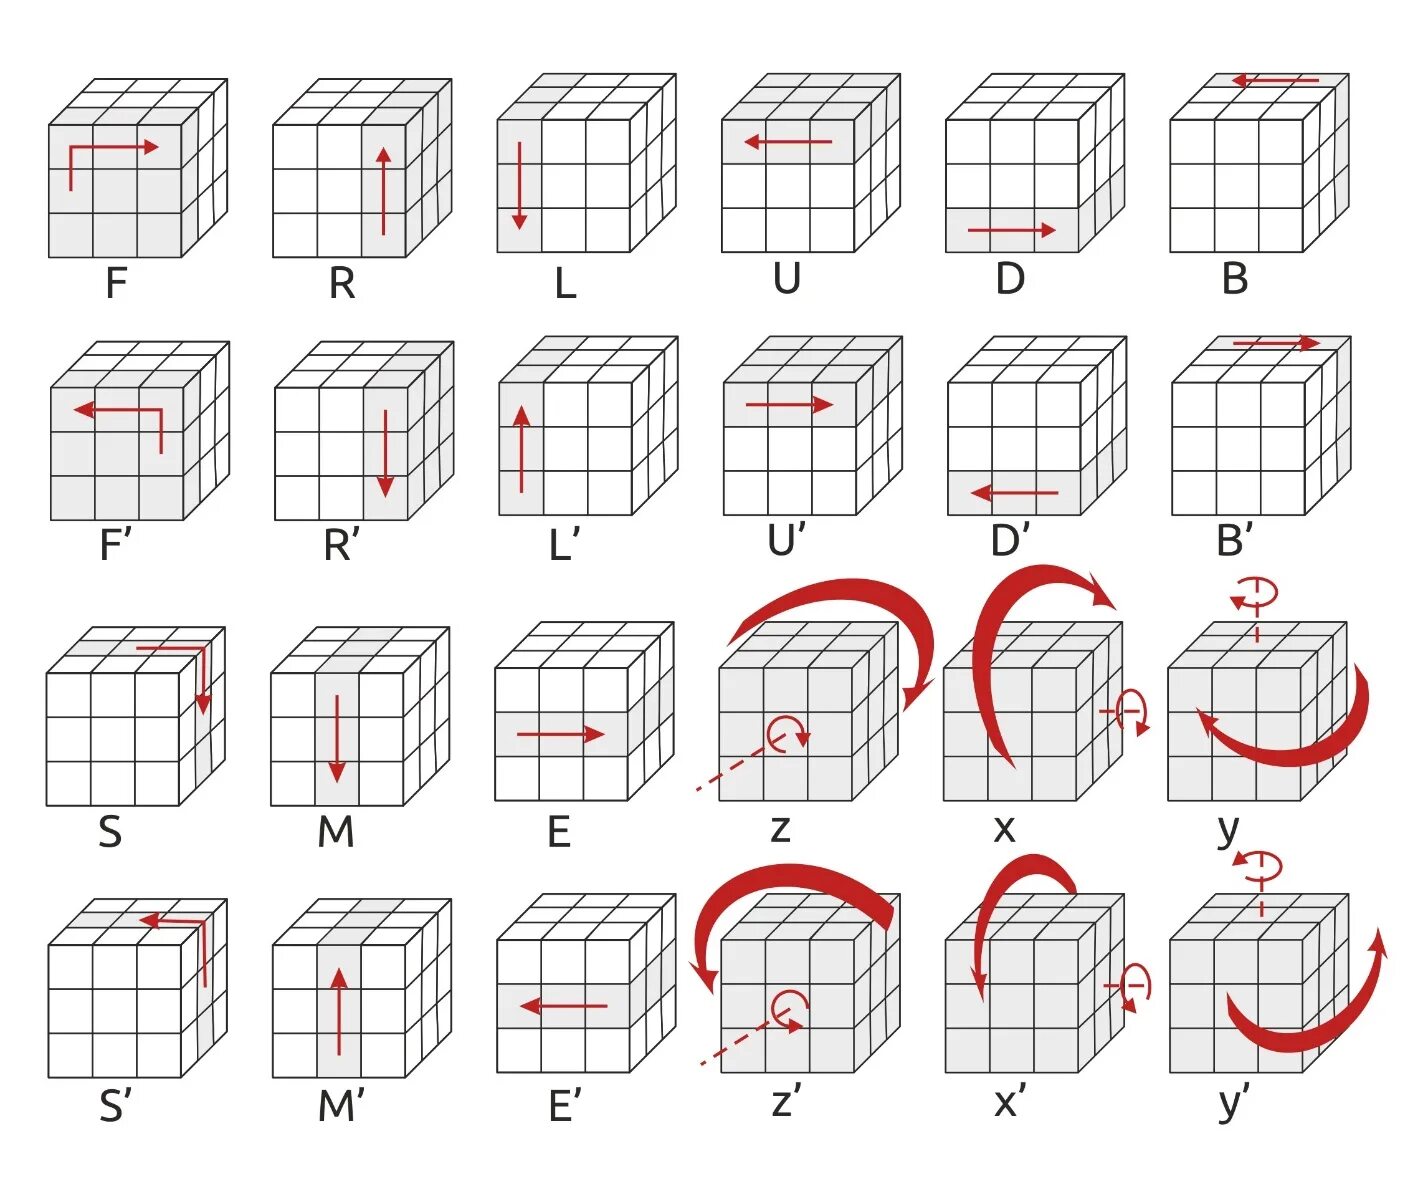 Инструкция по сборке кубика. Формула сборки кубика Рубика 3х3. Схема как собирать кубик рубик 3х3. Схема сборки кубика Рубика 3х3. Кубик-Рубика 3х3 сборка пошагово.